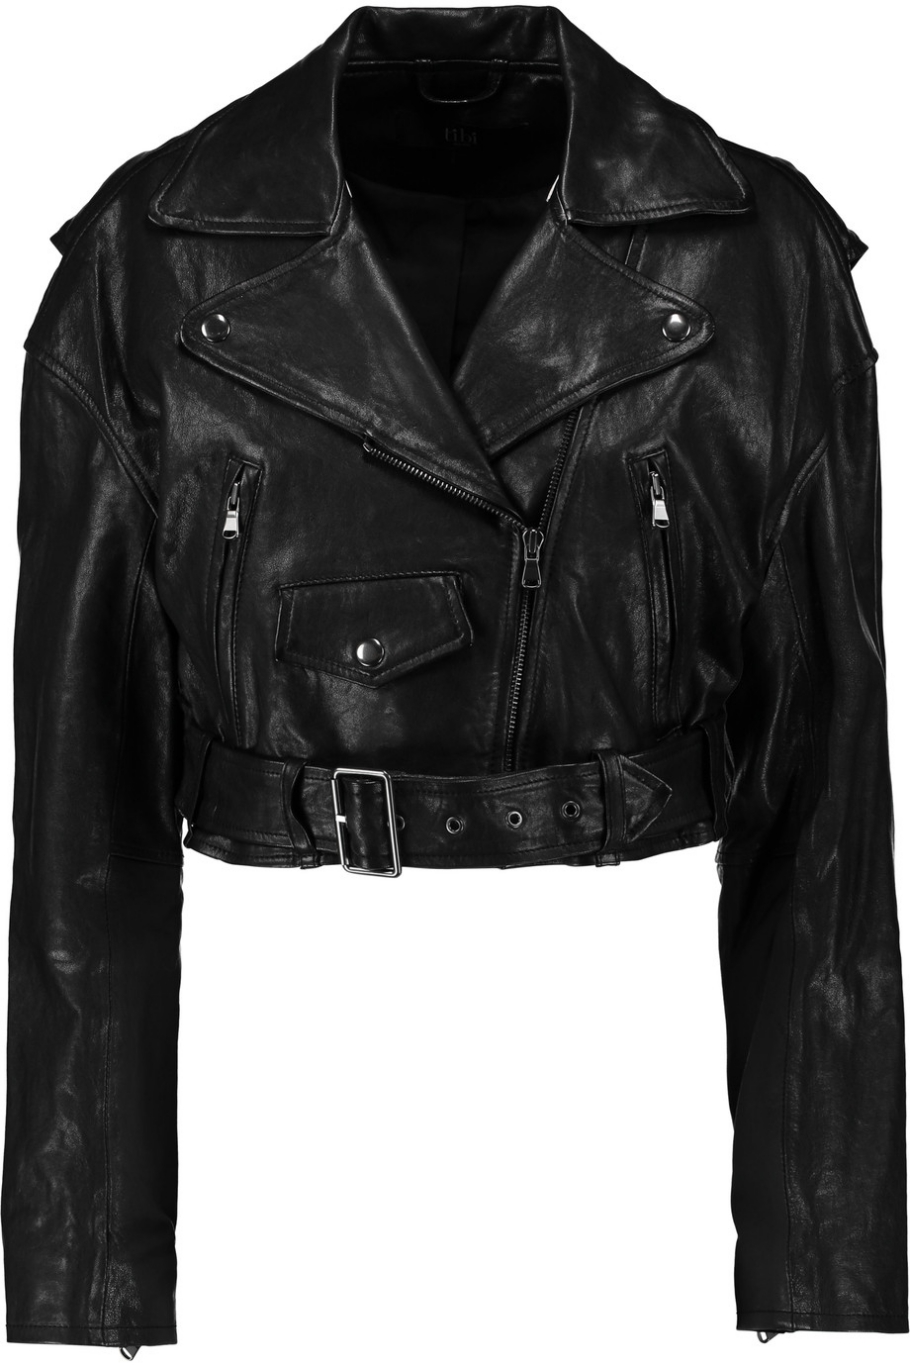 Leather Skin Women Black Biker Motorcycle Genuine Leather Jacket